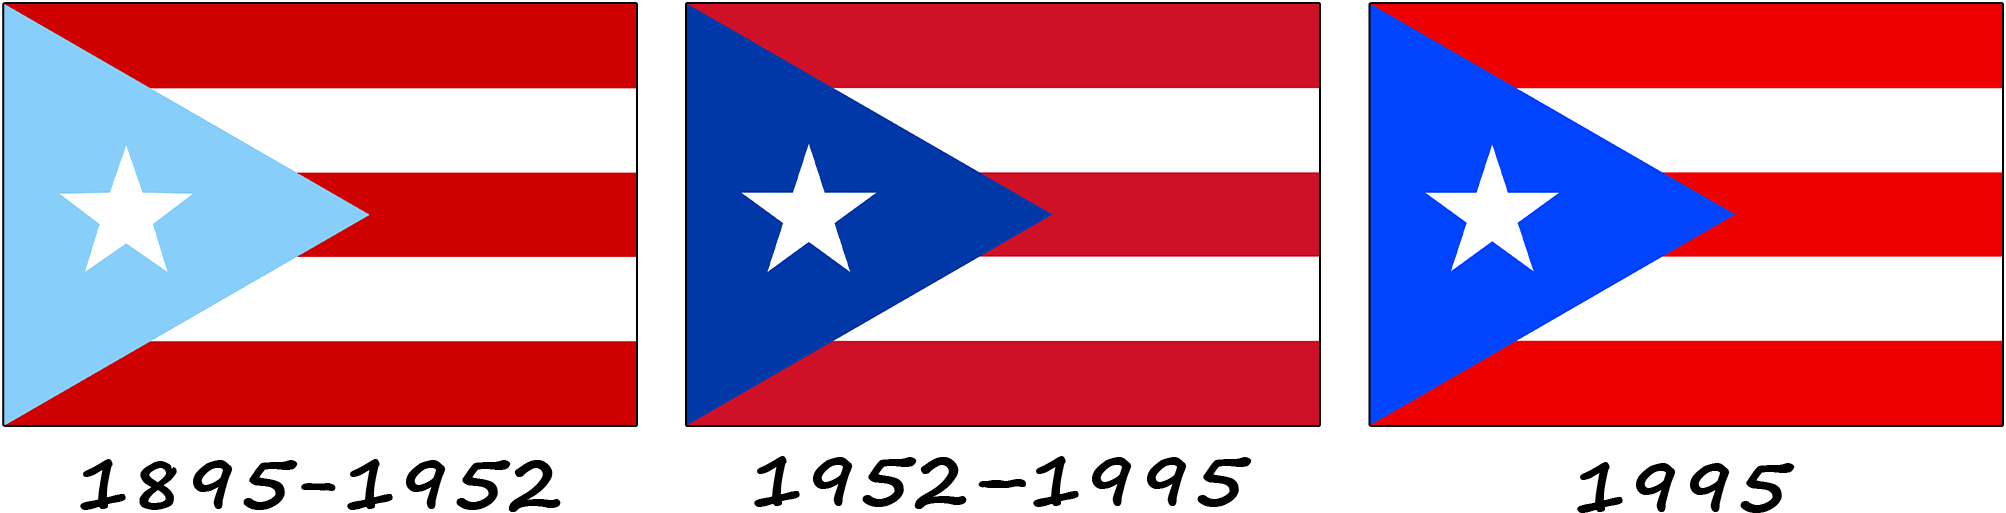 L'évolution du drapeau de Porto Rico